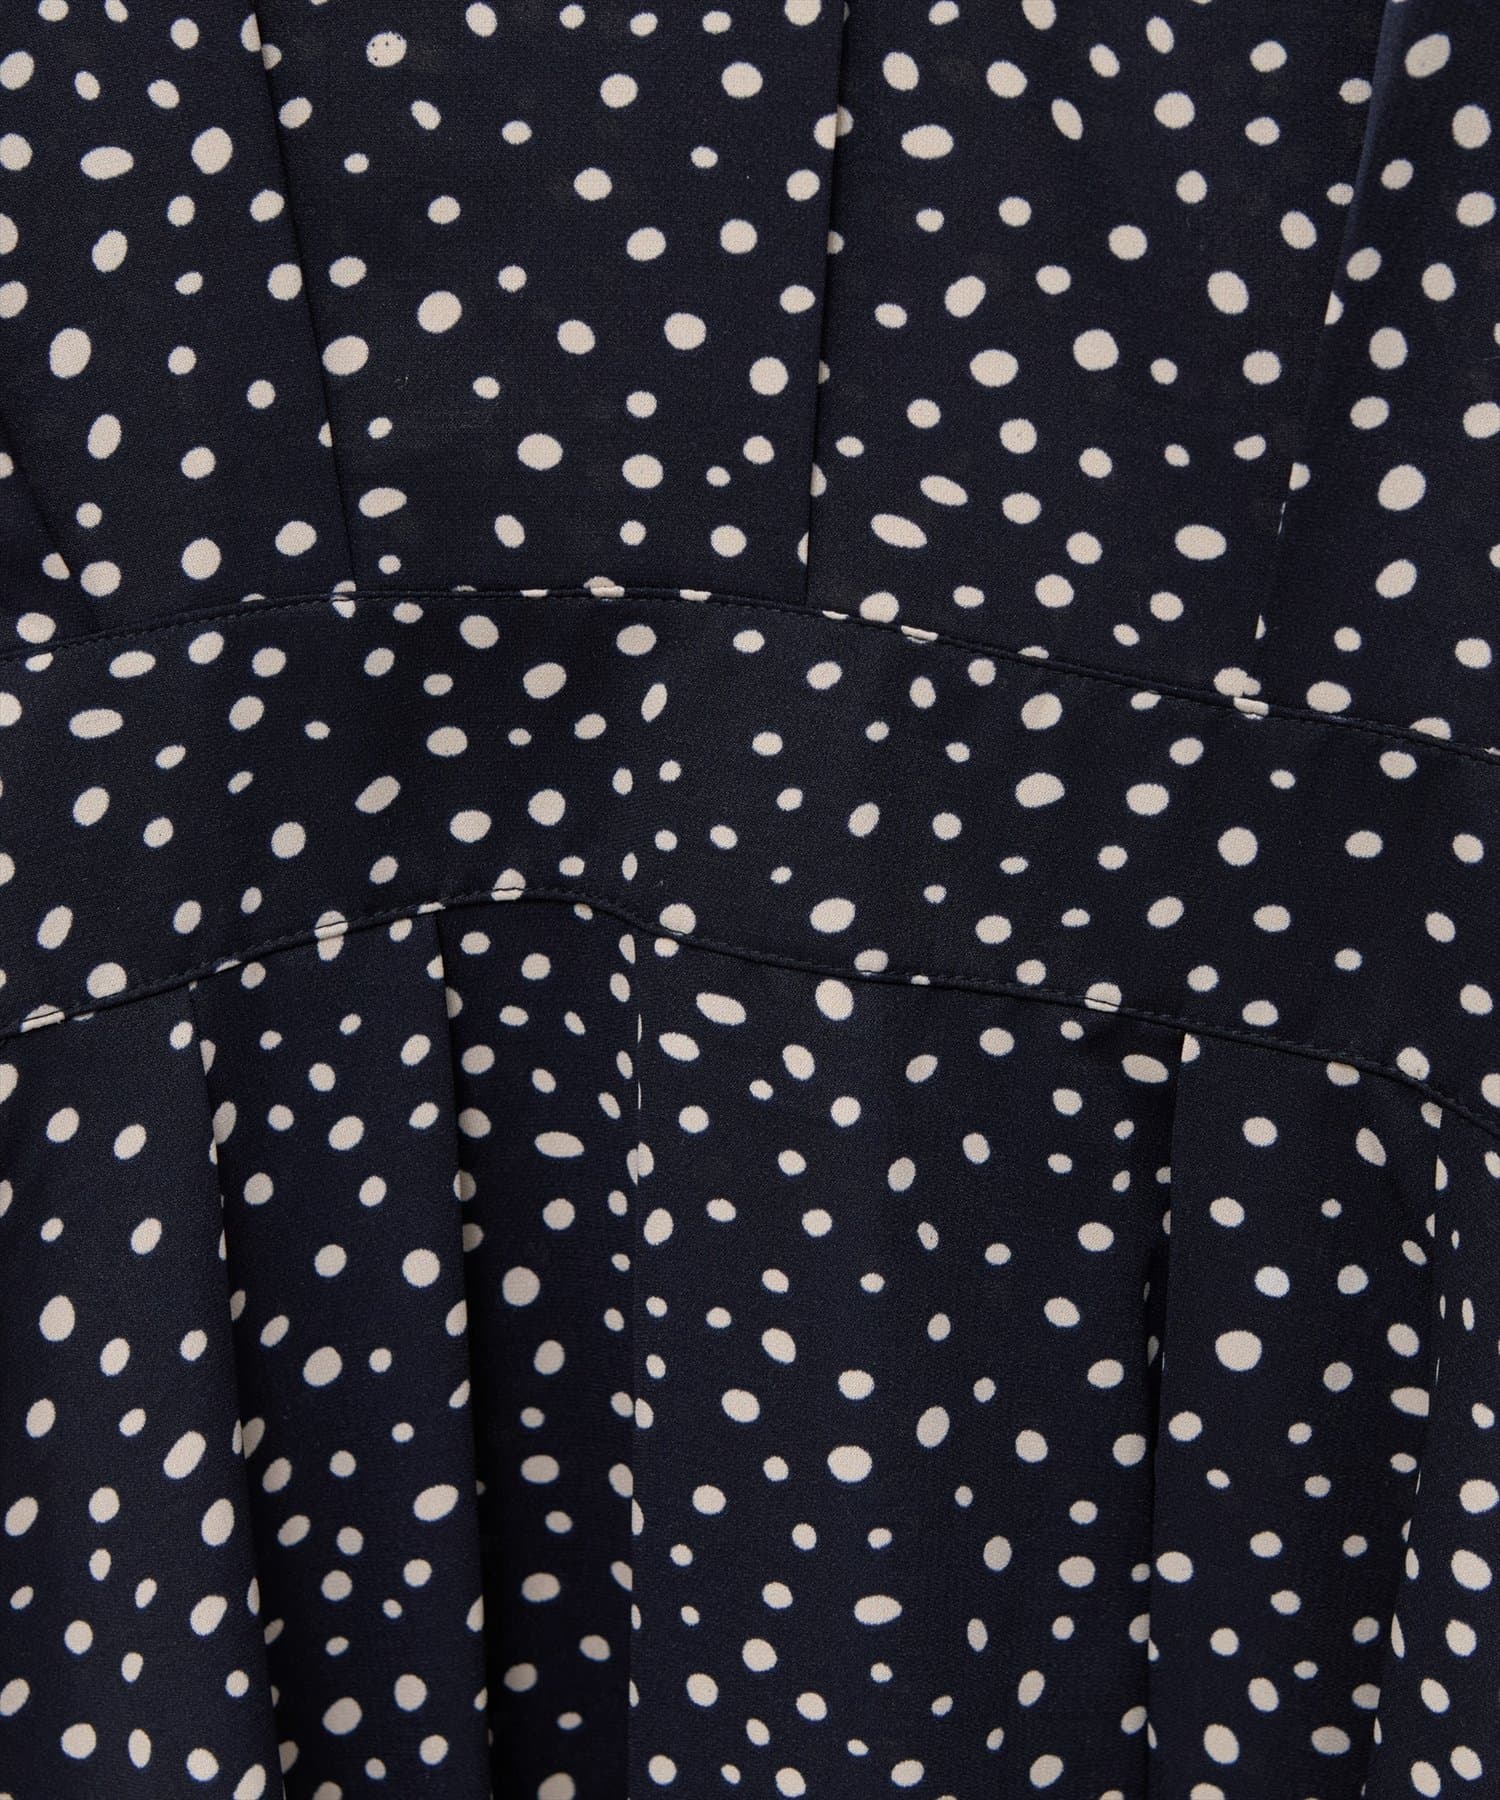 natural couture(ナチュラルクチュール) スキッパー衿7分袖ワンピース